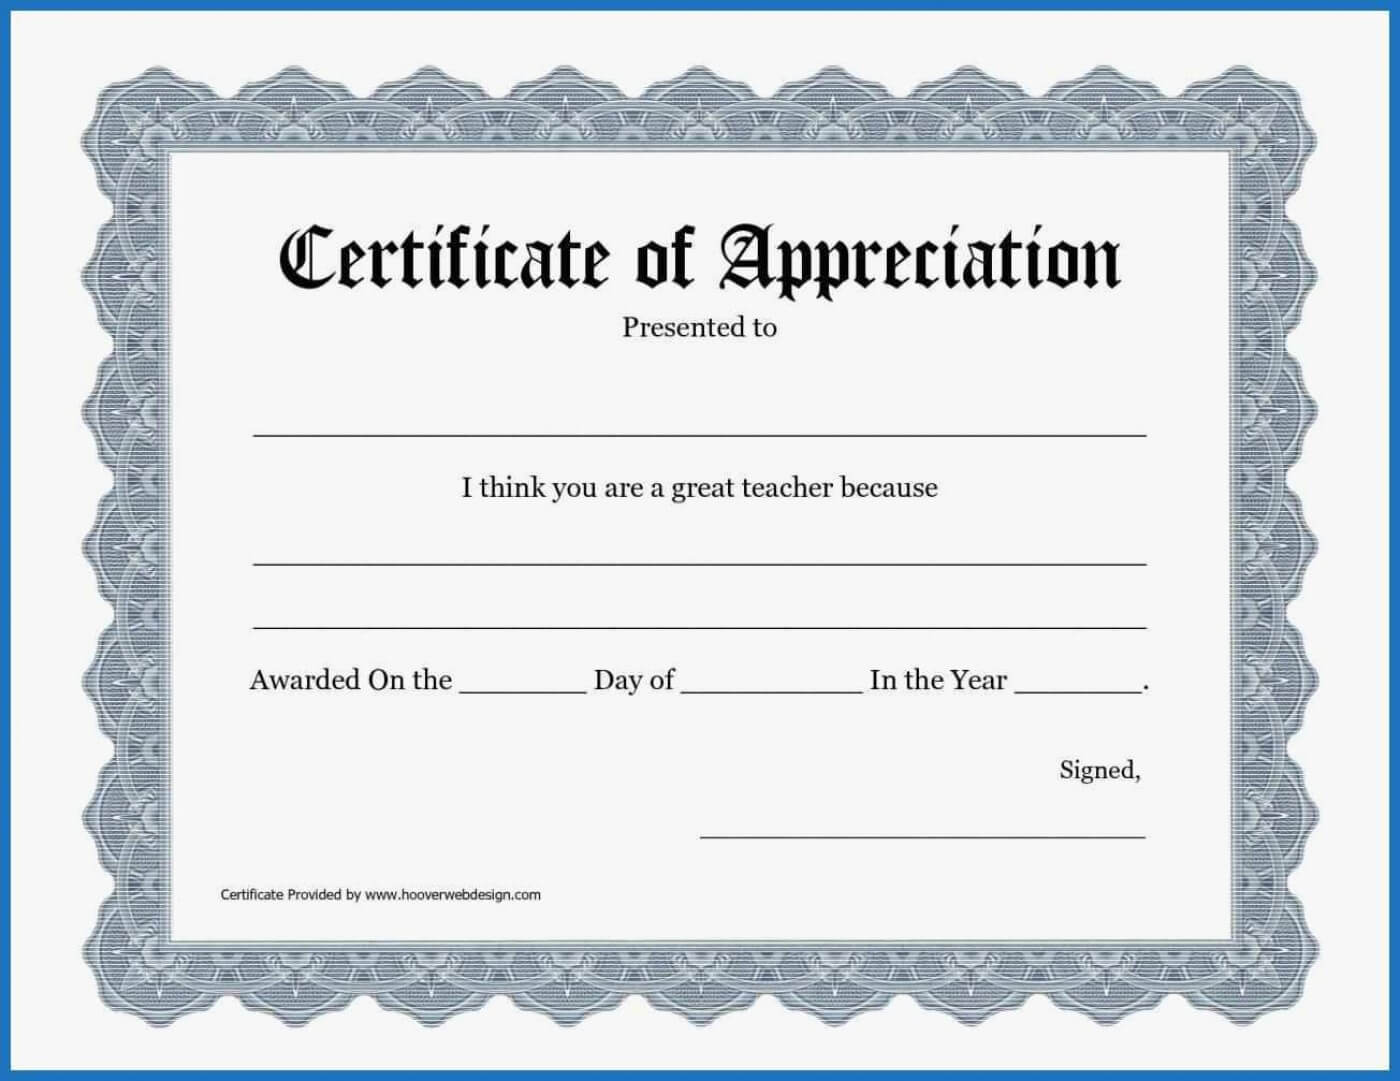 020-certificate-of-appreciation-template-word-free-ideas-in-blank